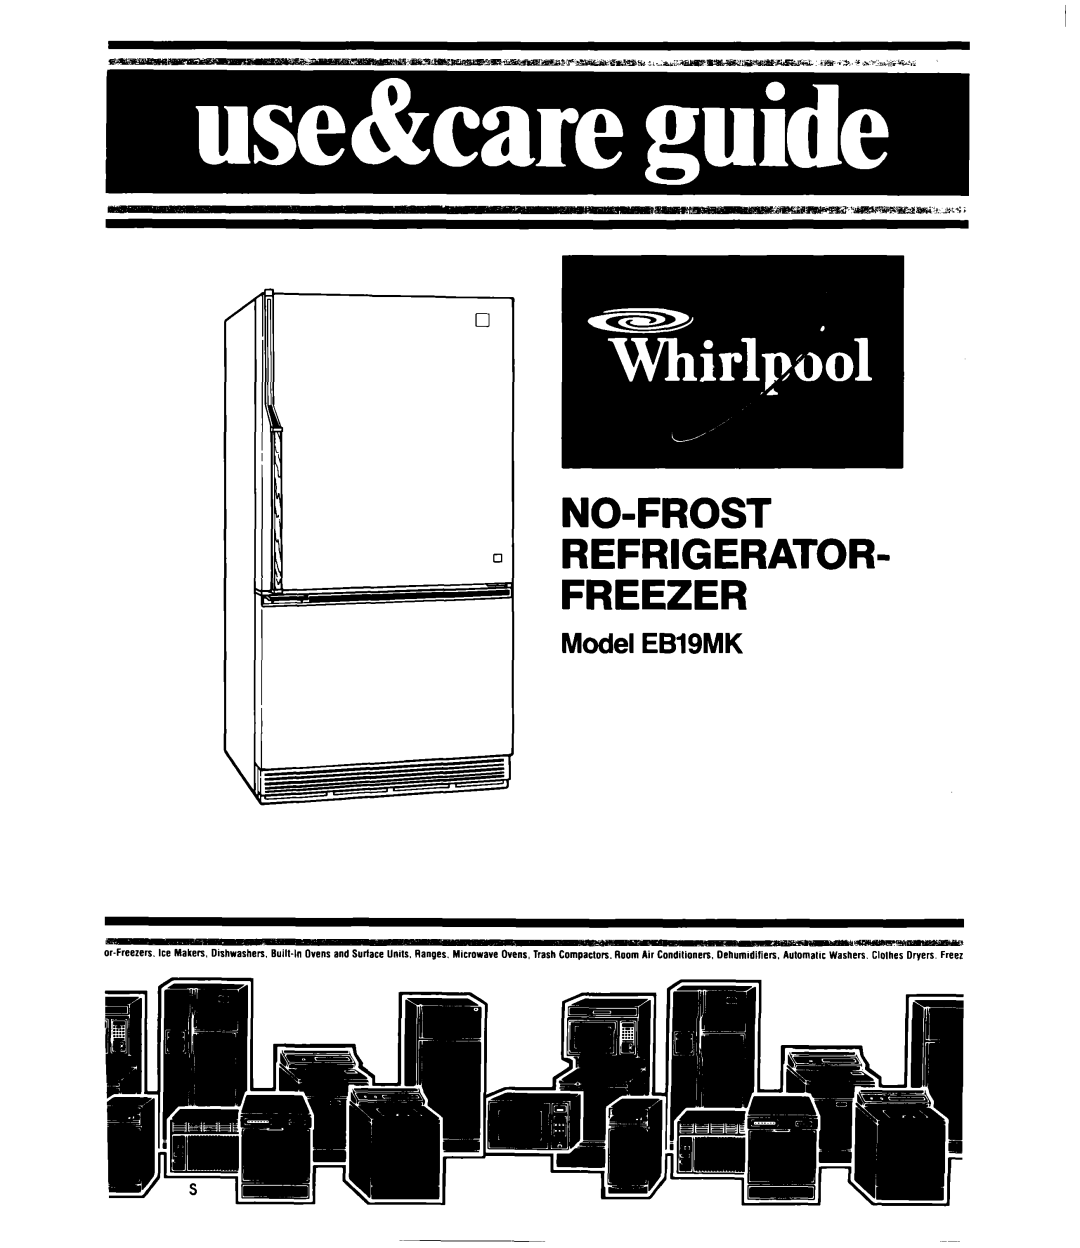 Whirlpool EBI9MK manual No-Frost Refrigerator Freezer, Model EBISMK 